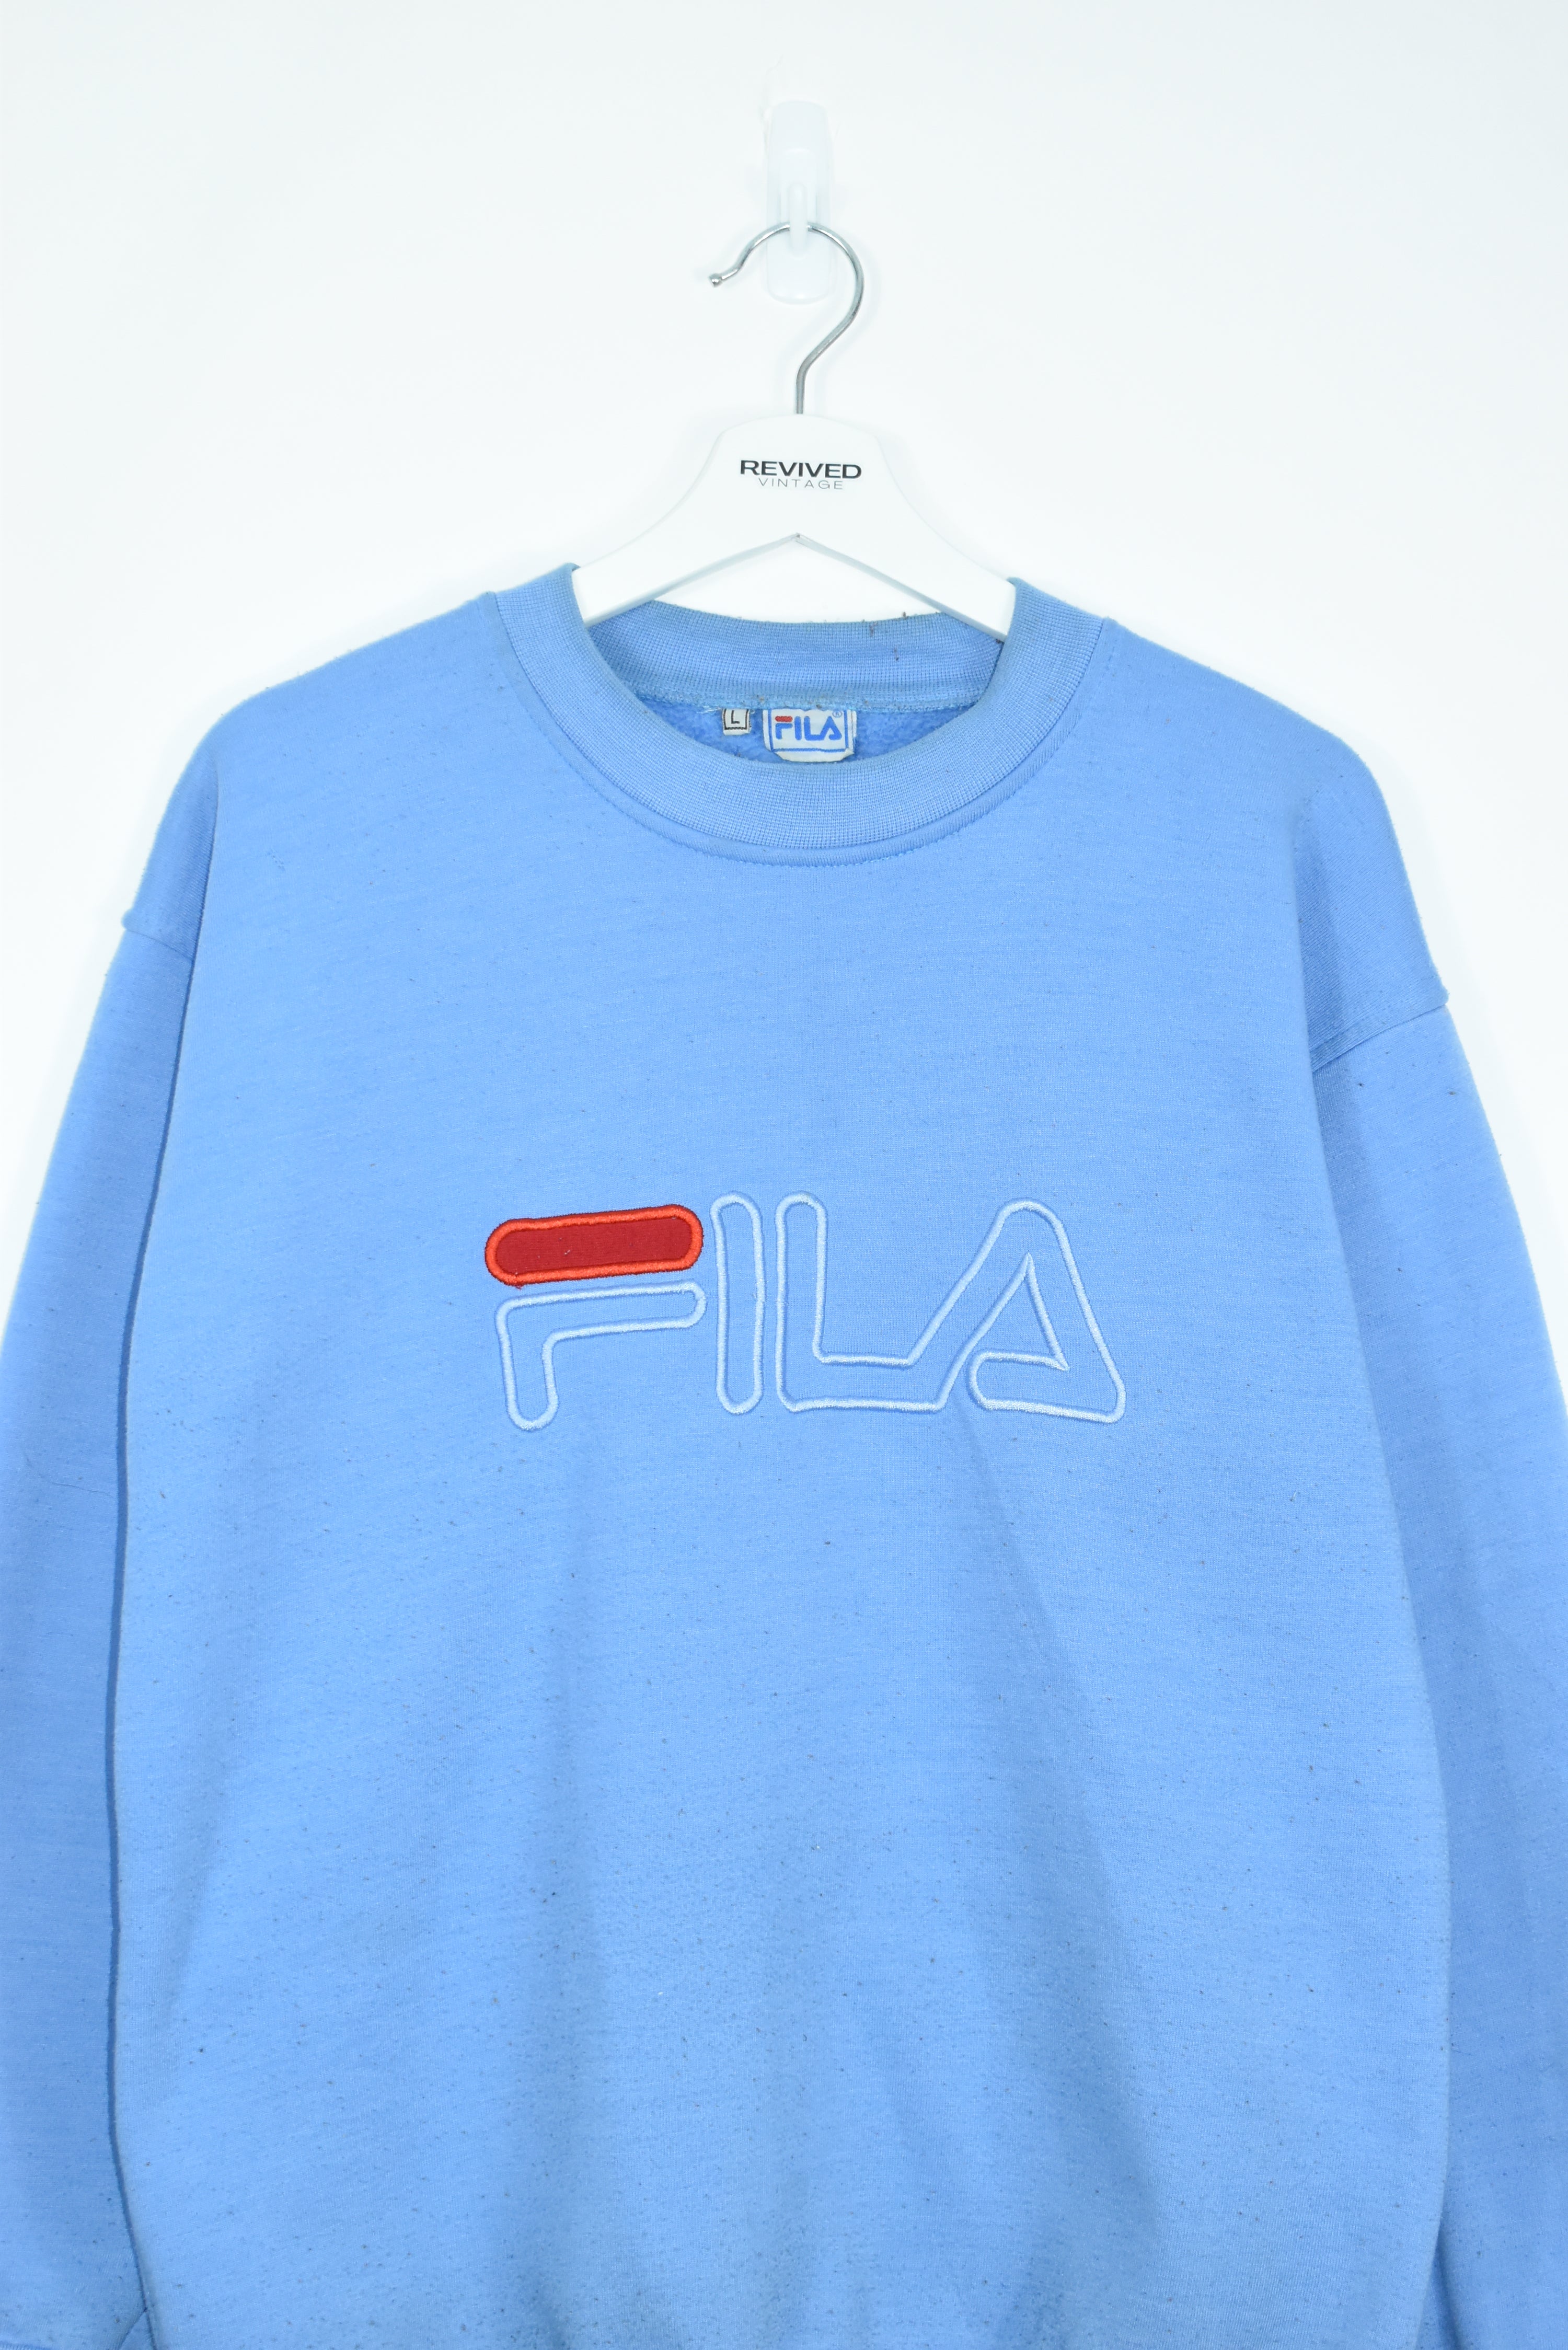 Vintage Fila Embroidered Sweatshirt Baby Blue Large